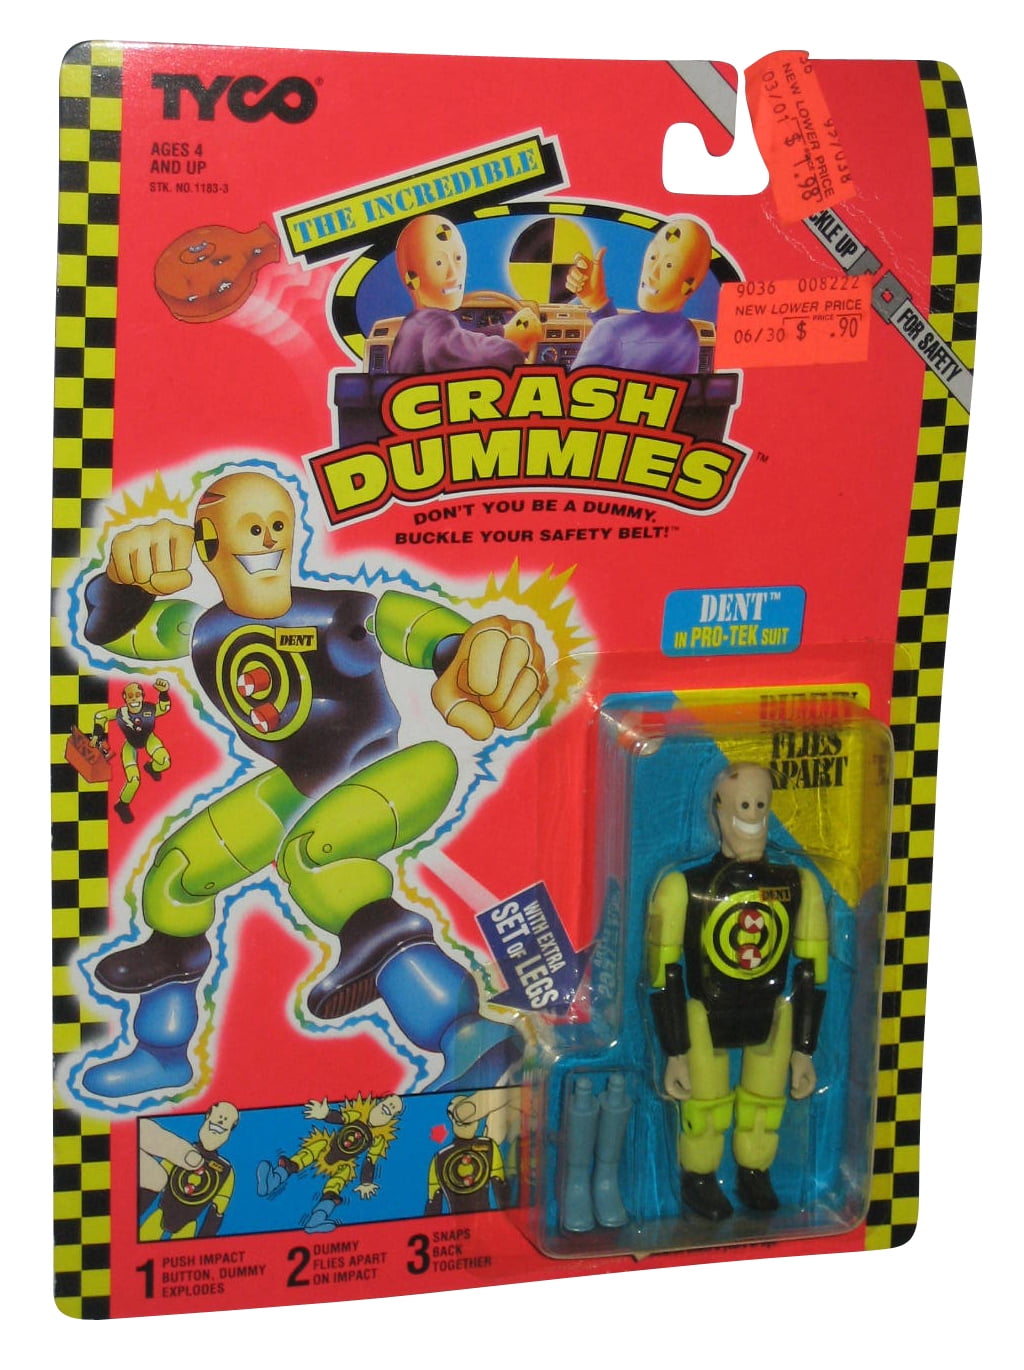 The Incredible Crash Dummies Dent In Pro Tek Suit Tyco Figure Walmart Com